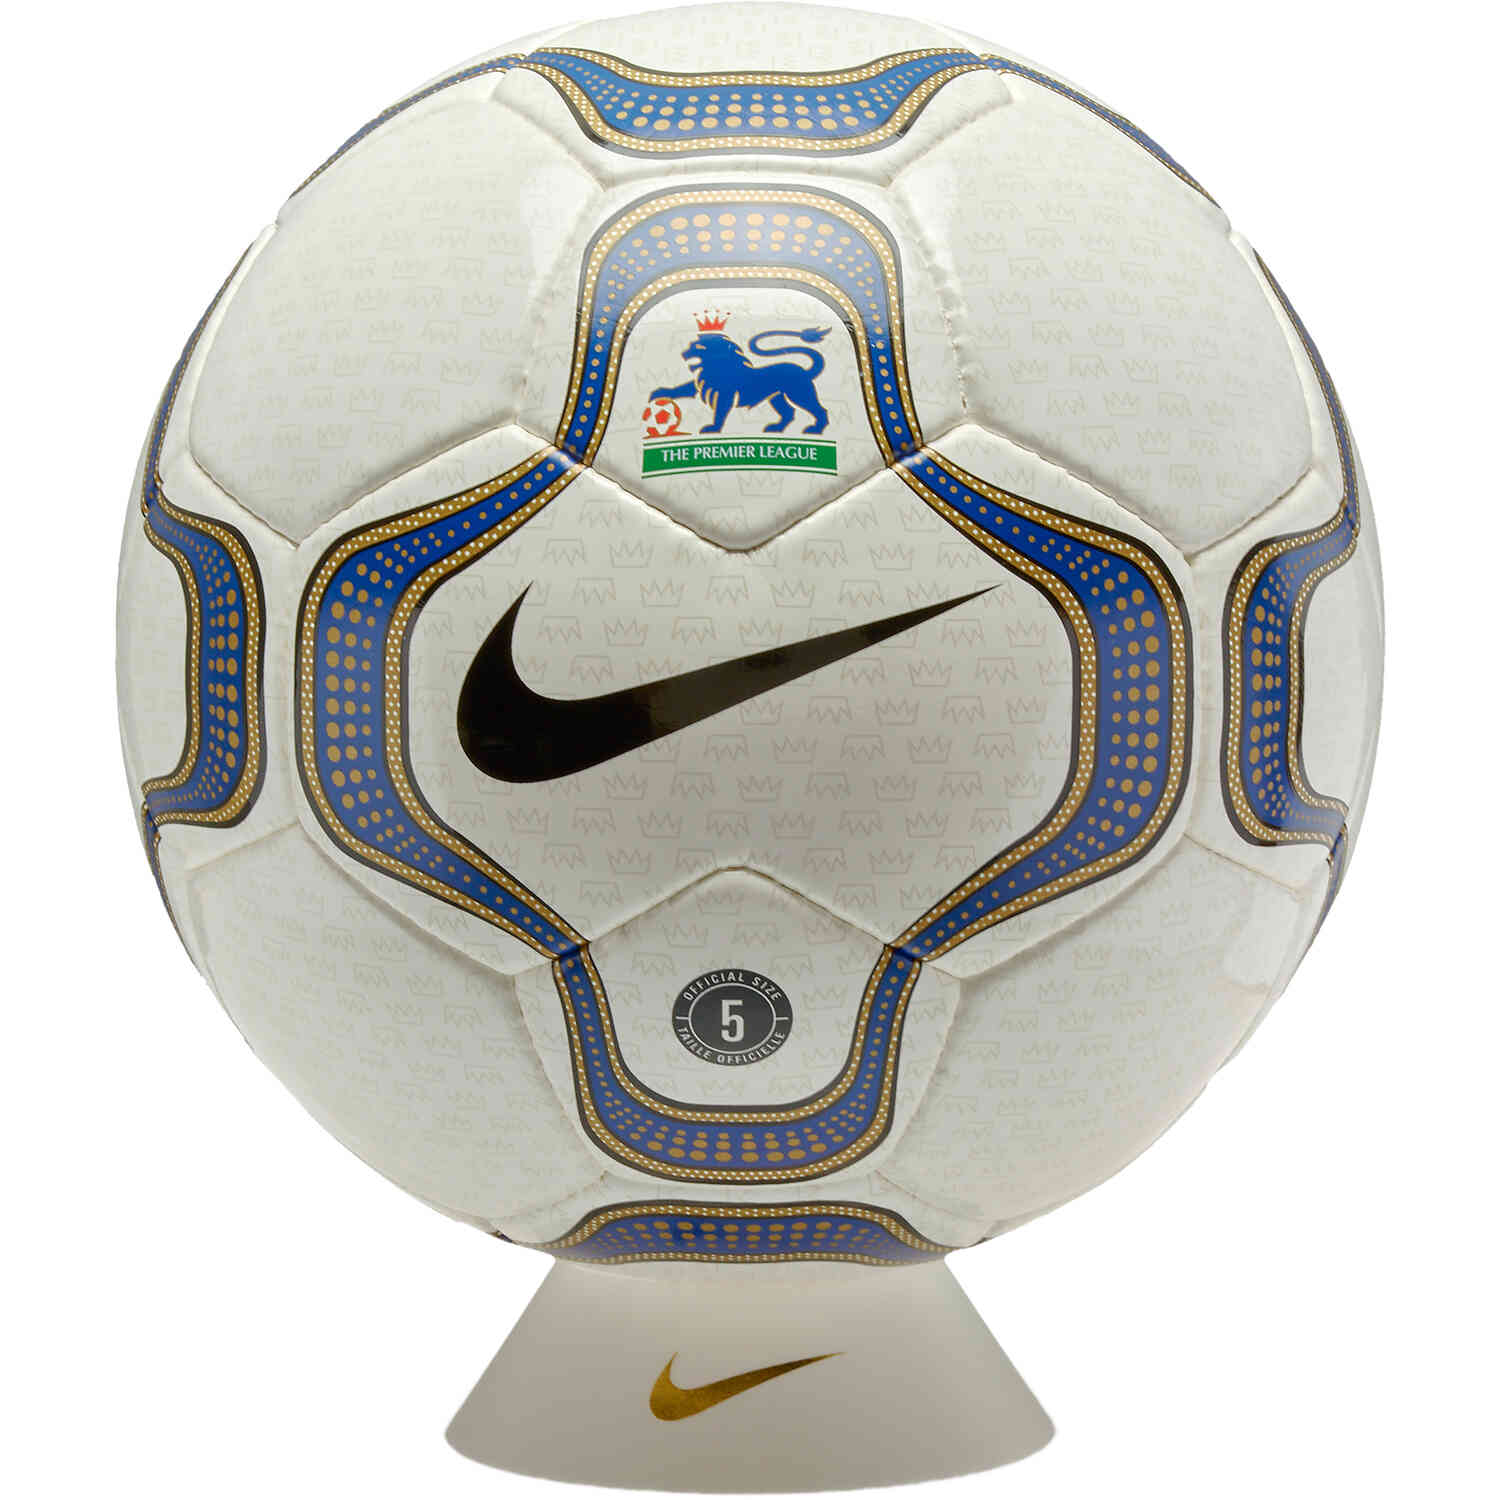 Nike League Geo Merlin Match Soccer Ball - White & Black with Blue - Soccer Master